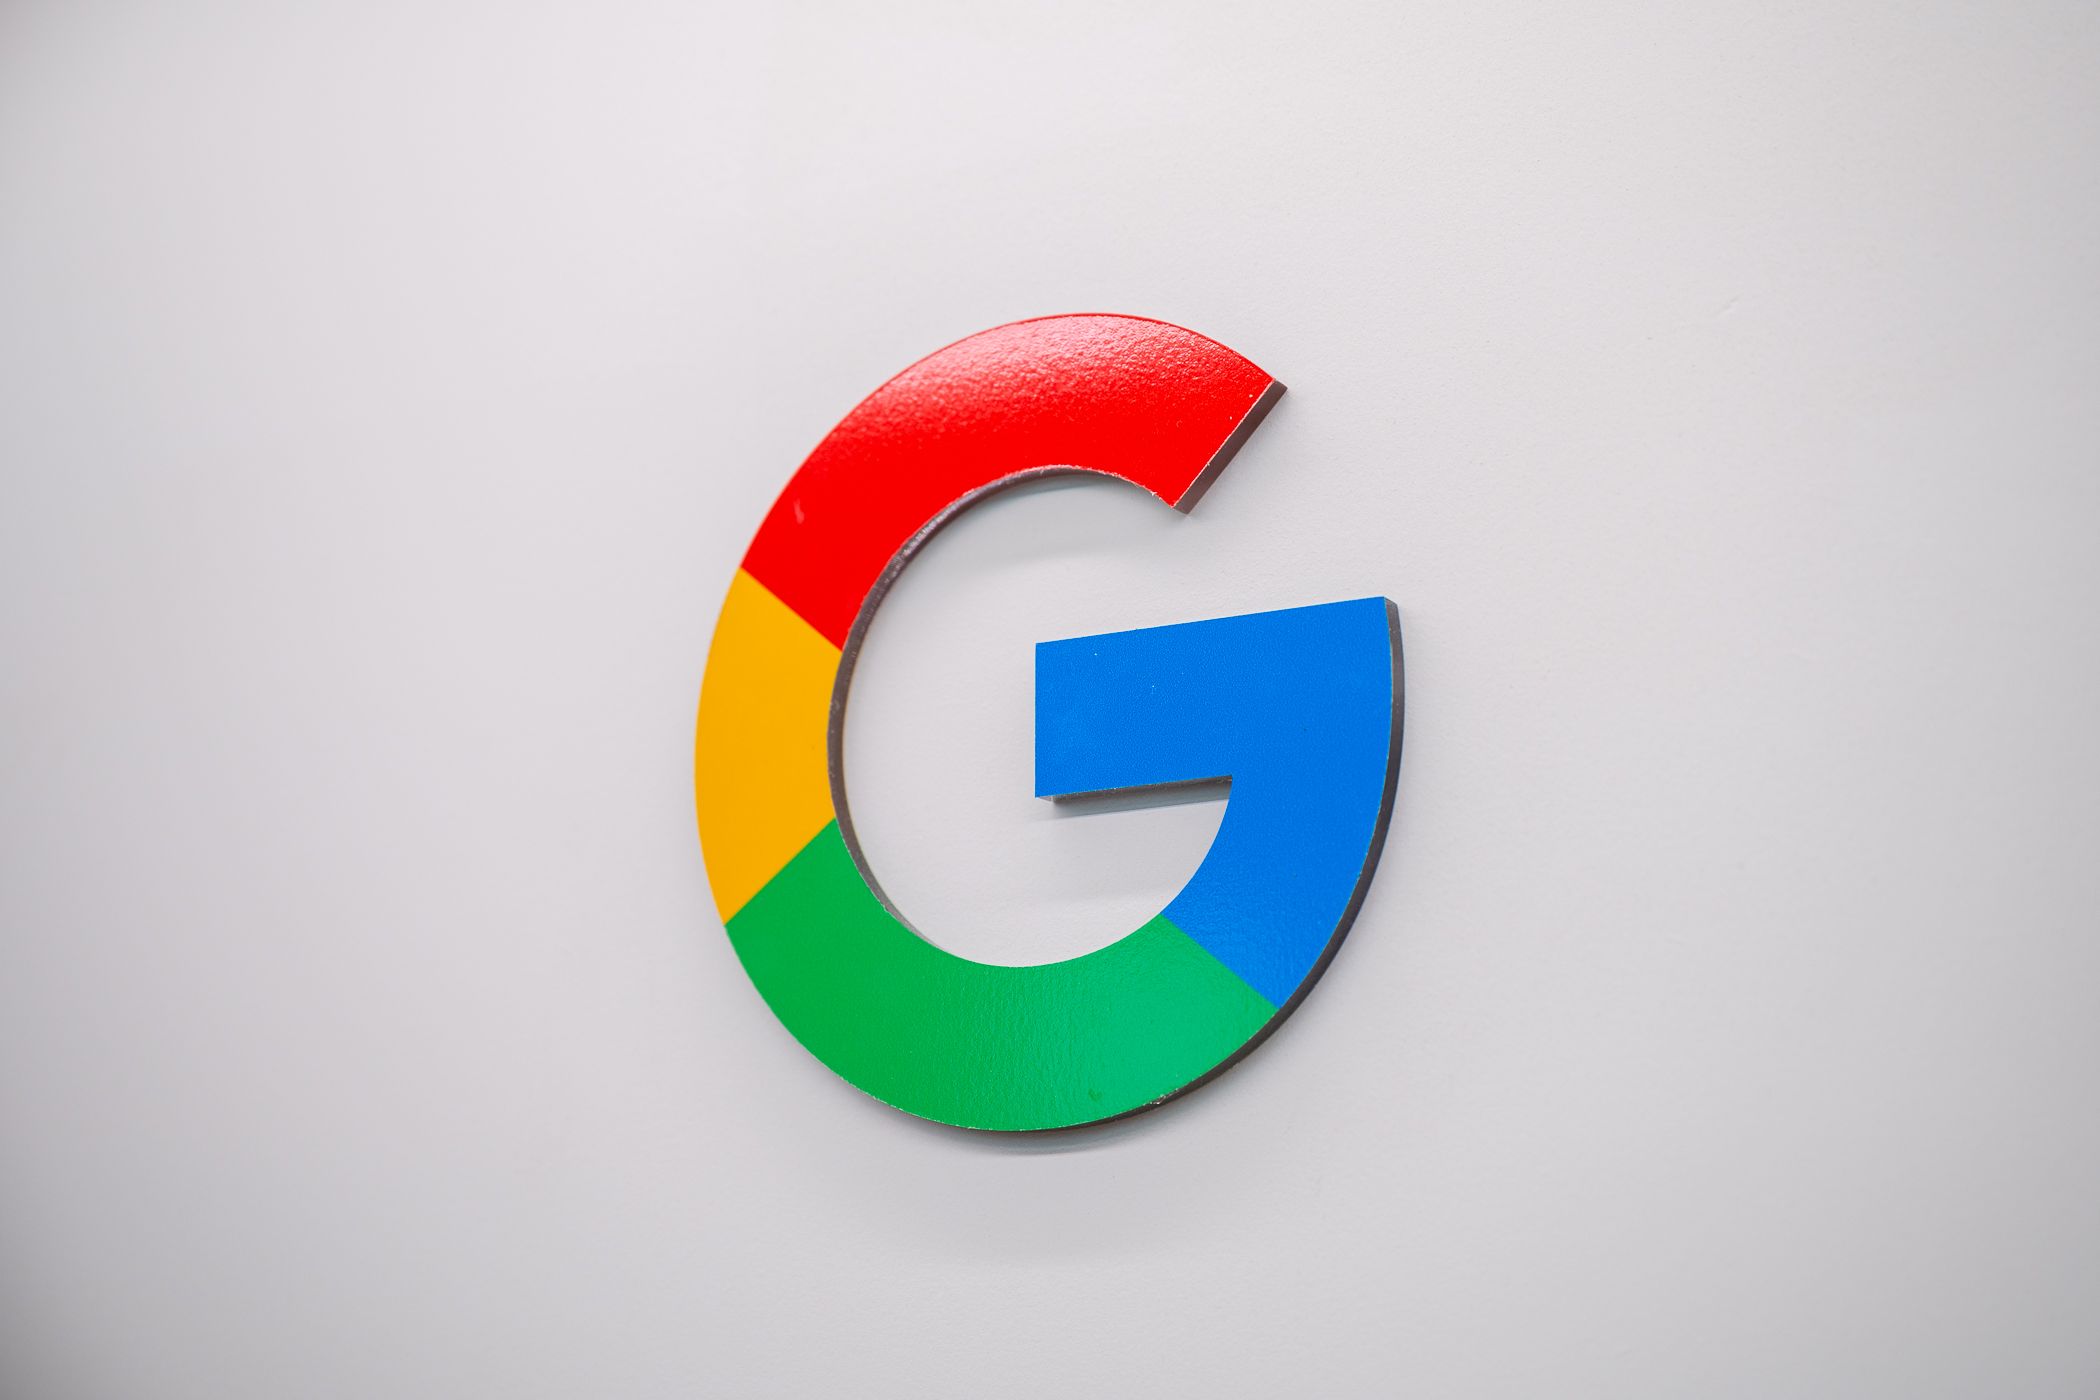 The Google logo on a wall.